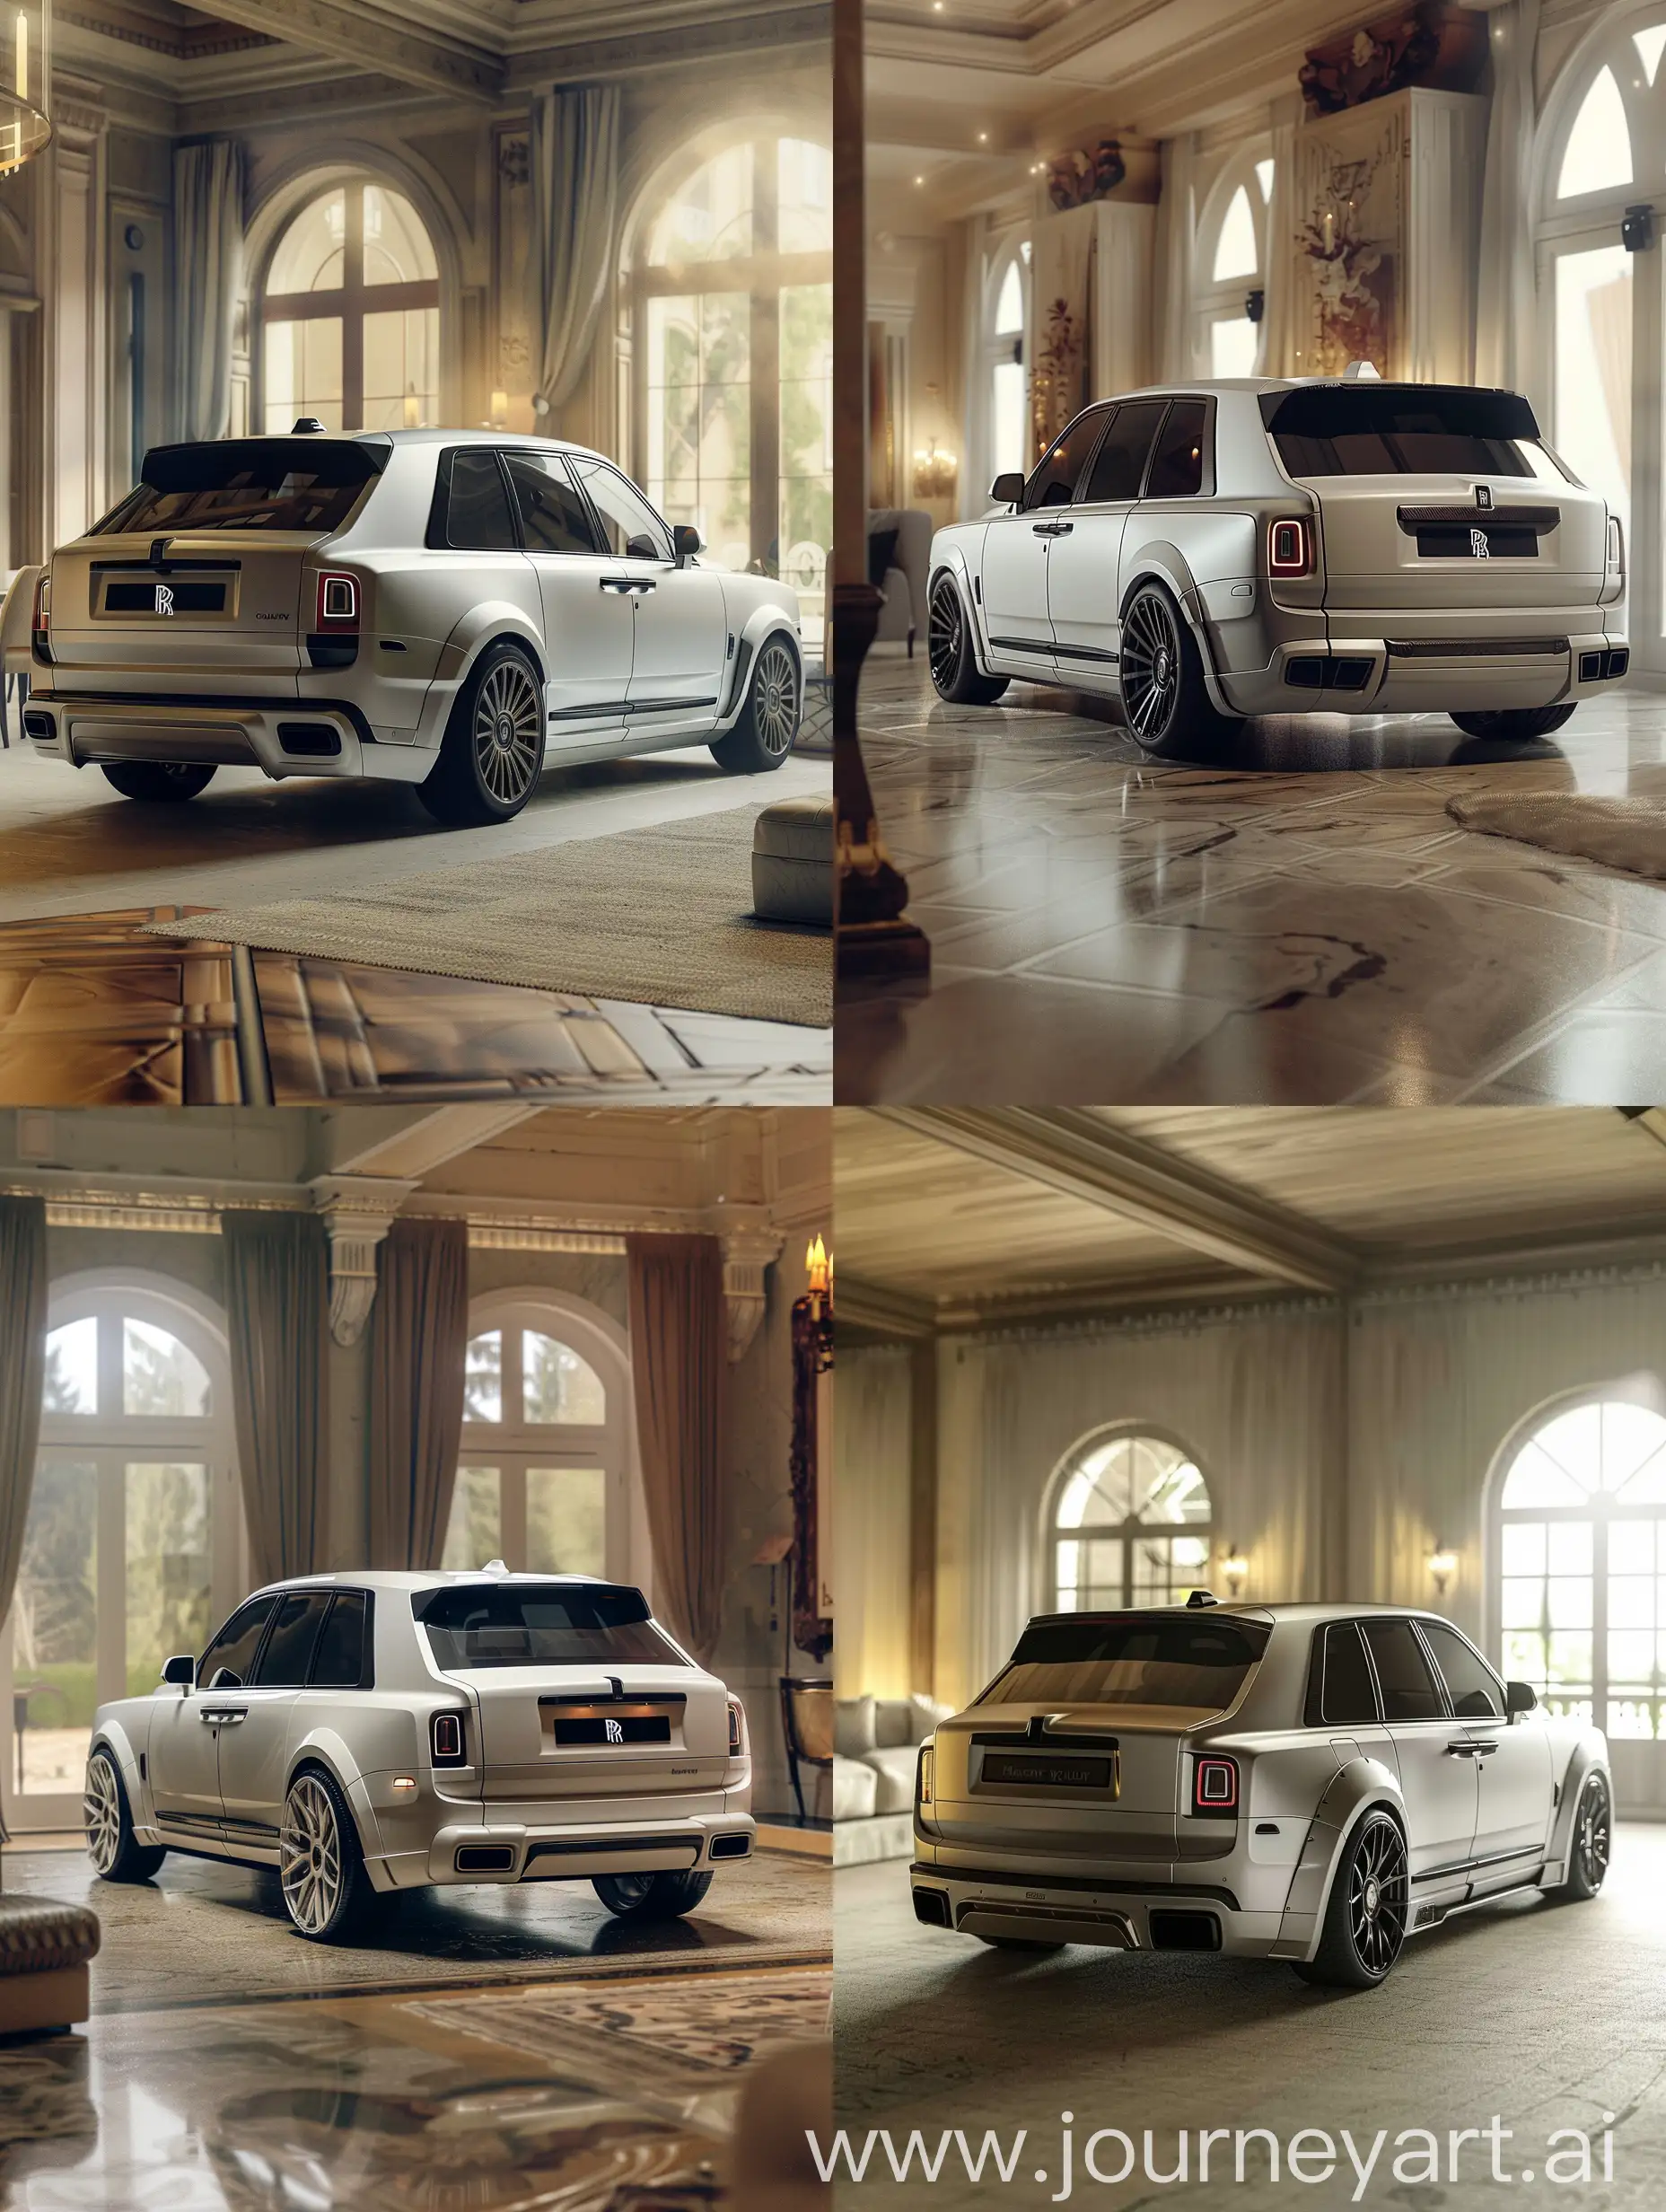 Luxurious-Mansory-Rolls-Royce-Cullinan-in-Elegant-Living-Room-Setting